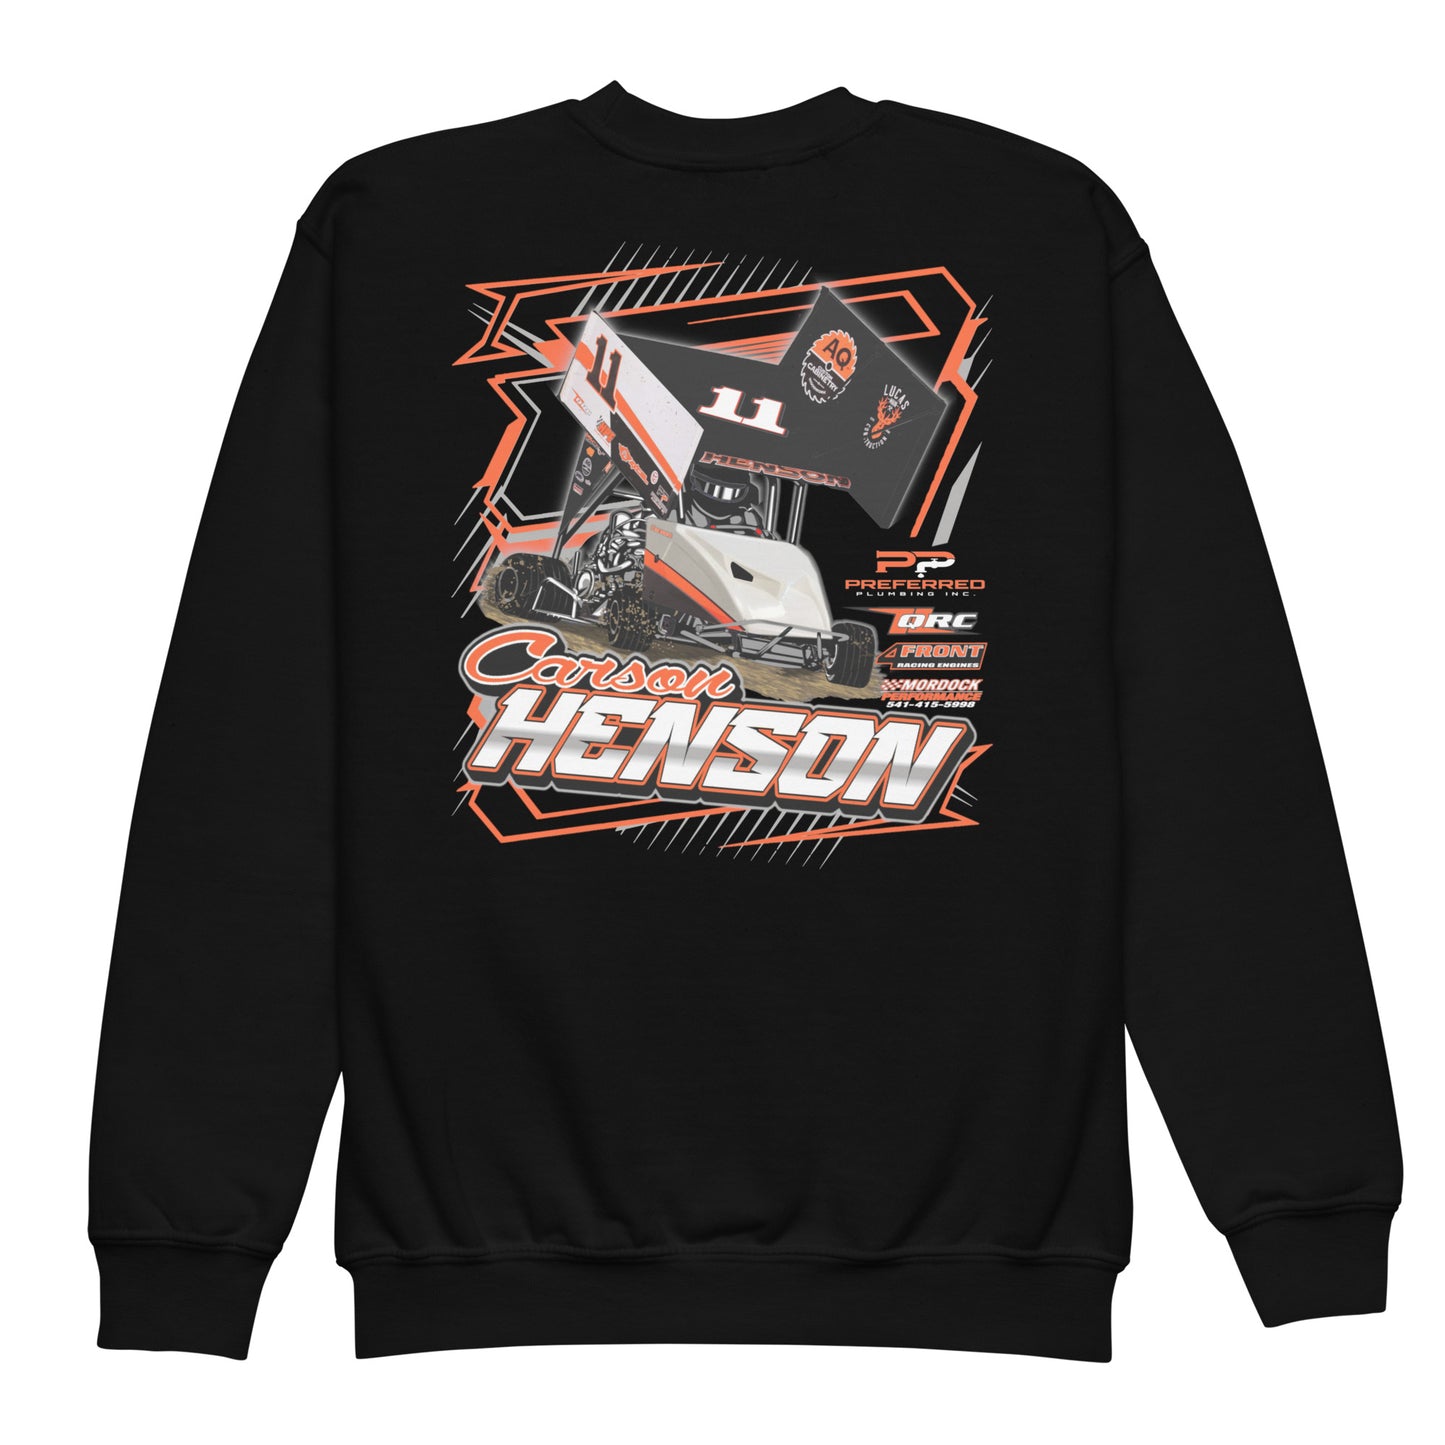 Carson Henson Kids crewneck sweatshirt